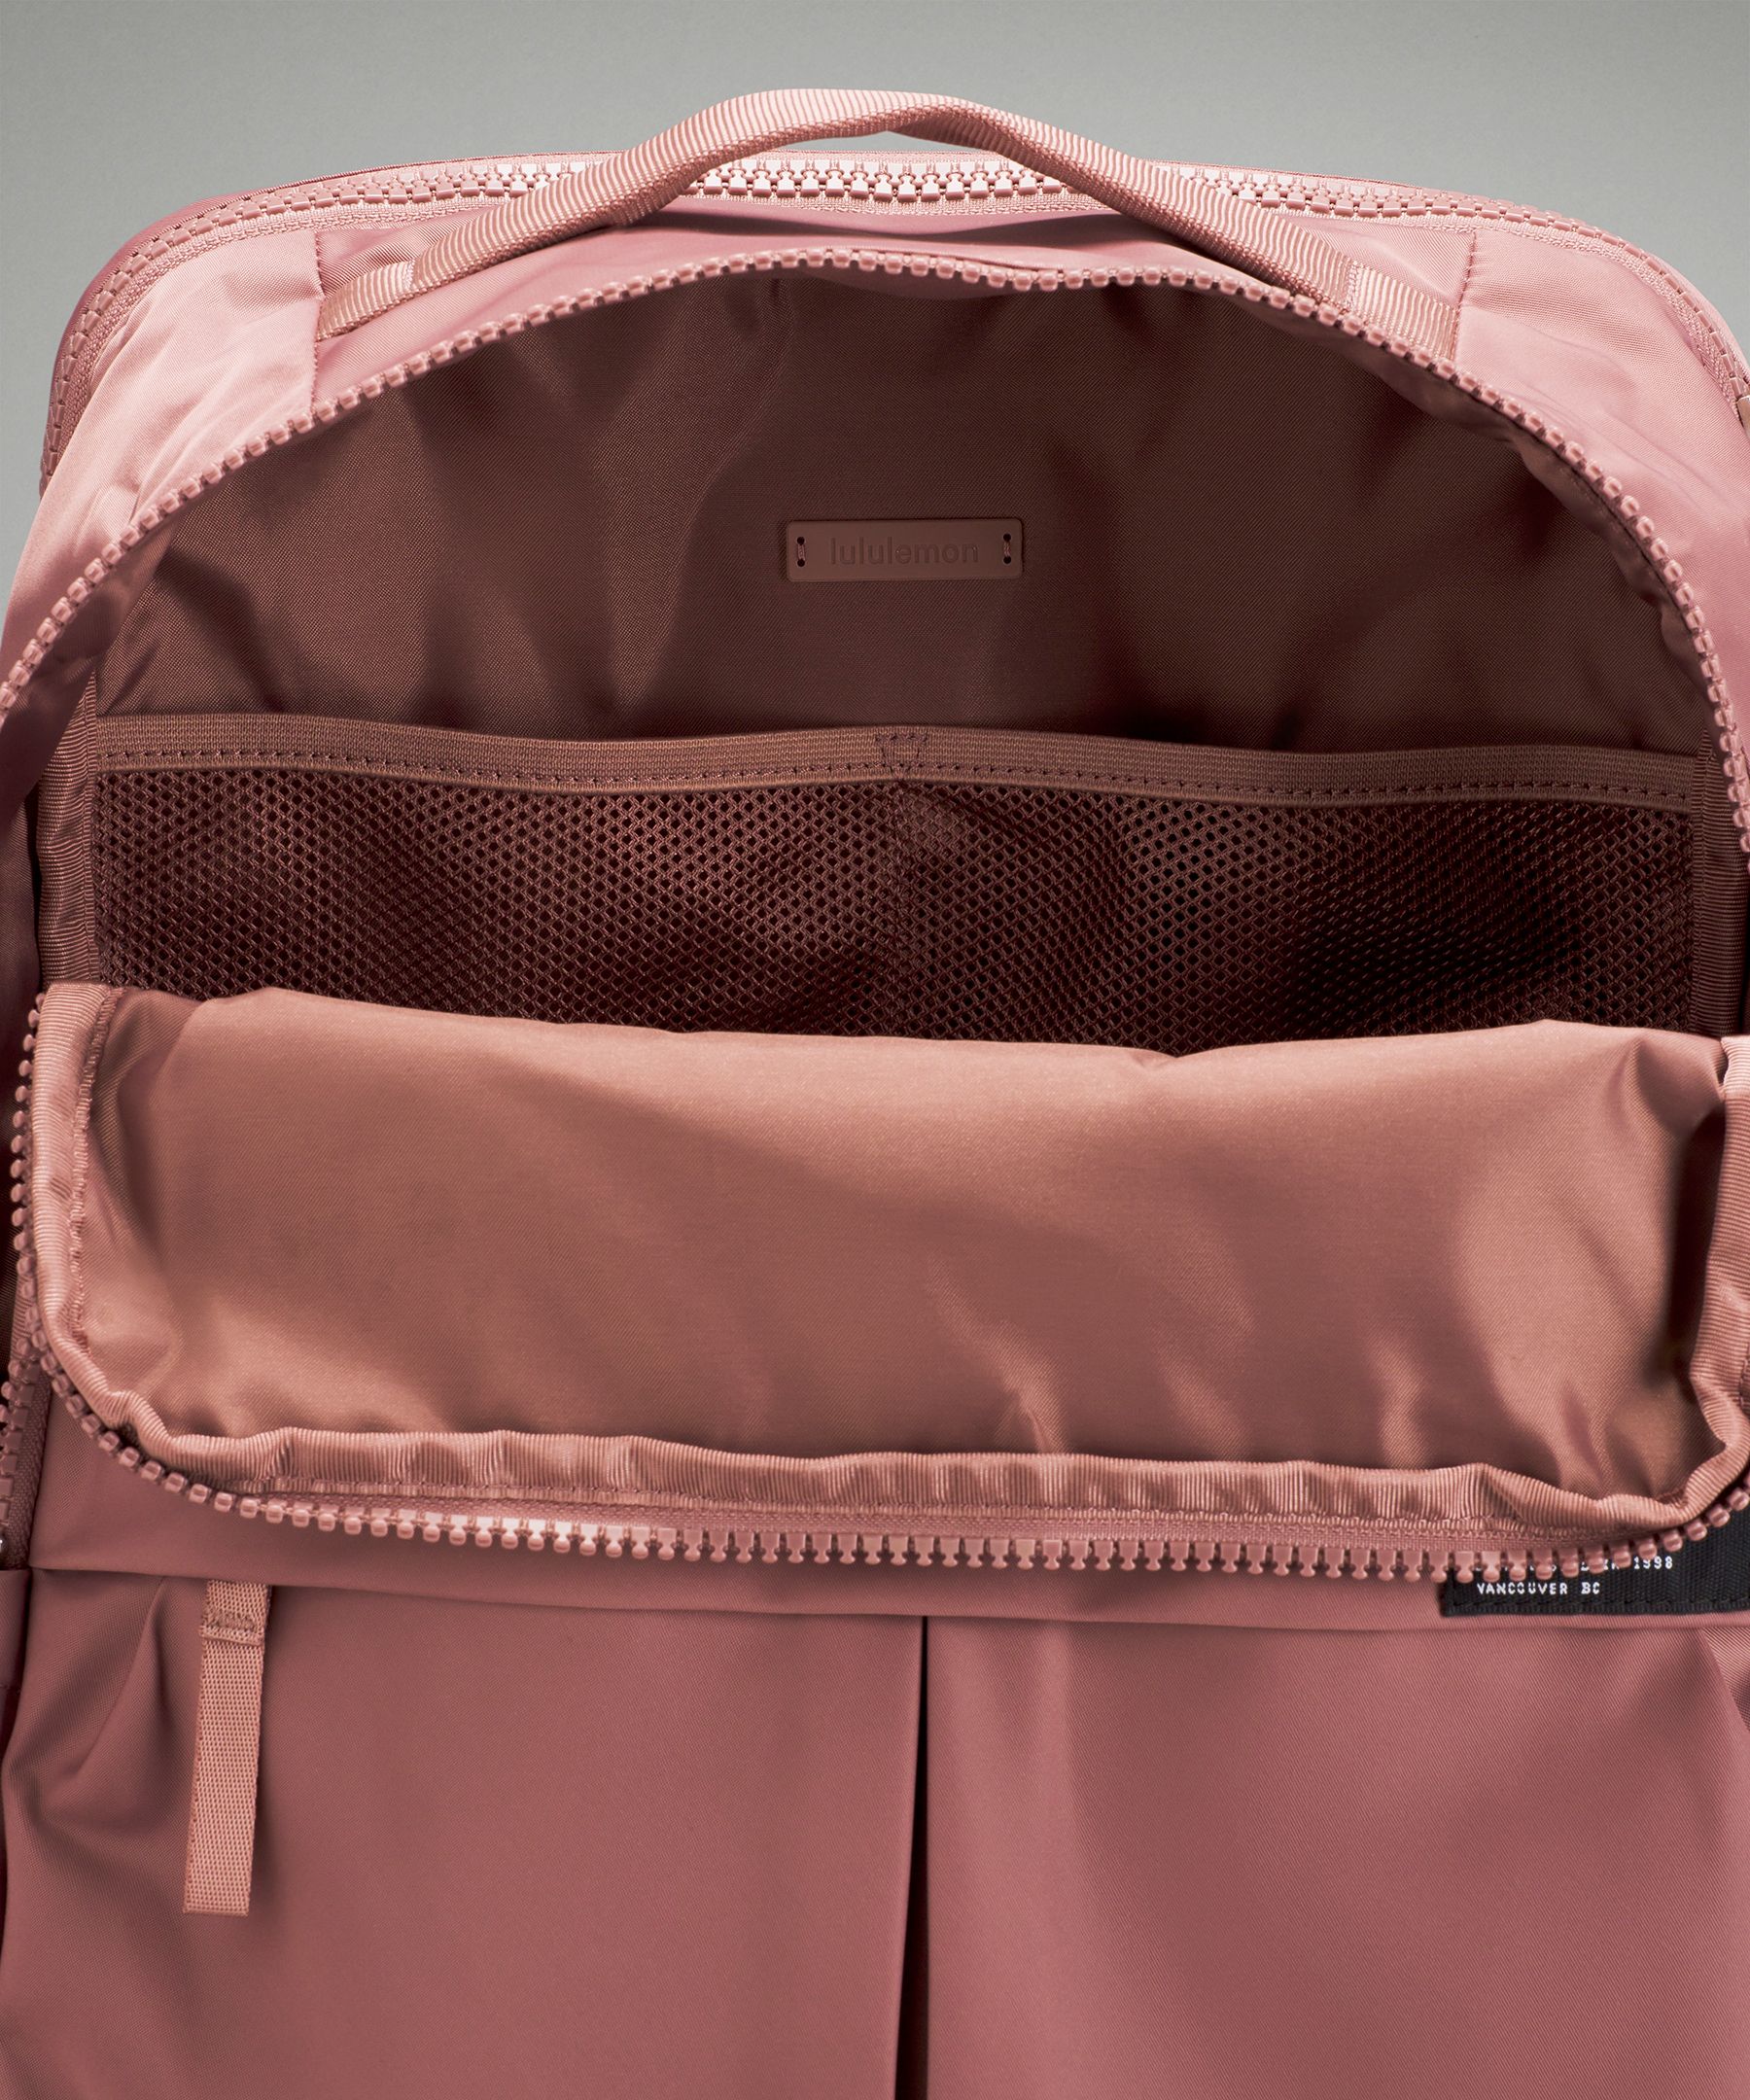 Lululemon Everyday Backpack 2.0 Review | International Society of